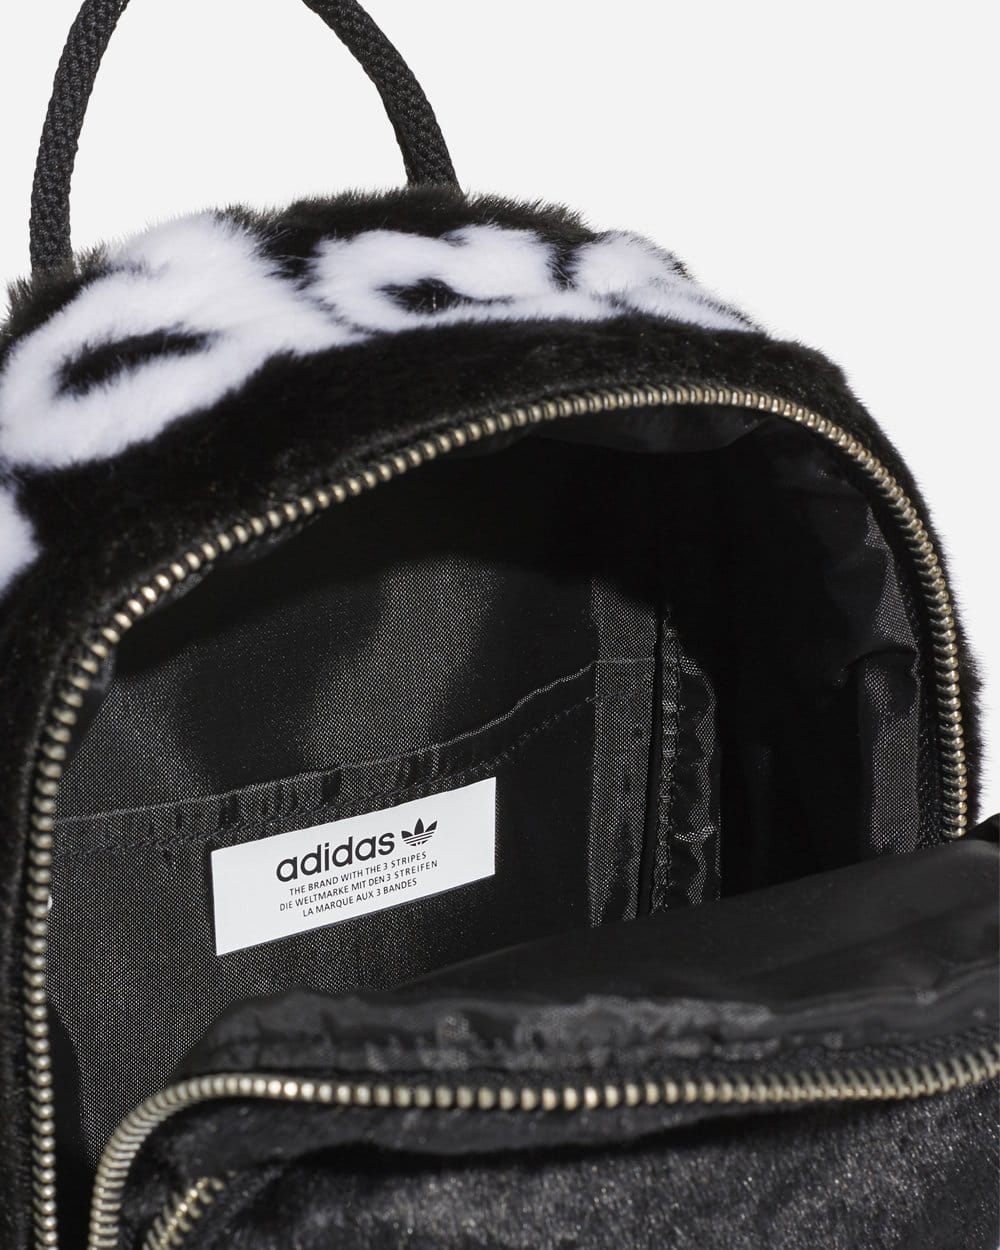 adidas fur backpack